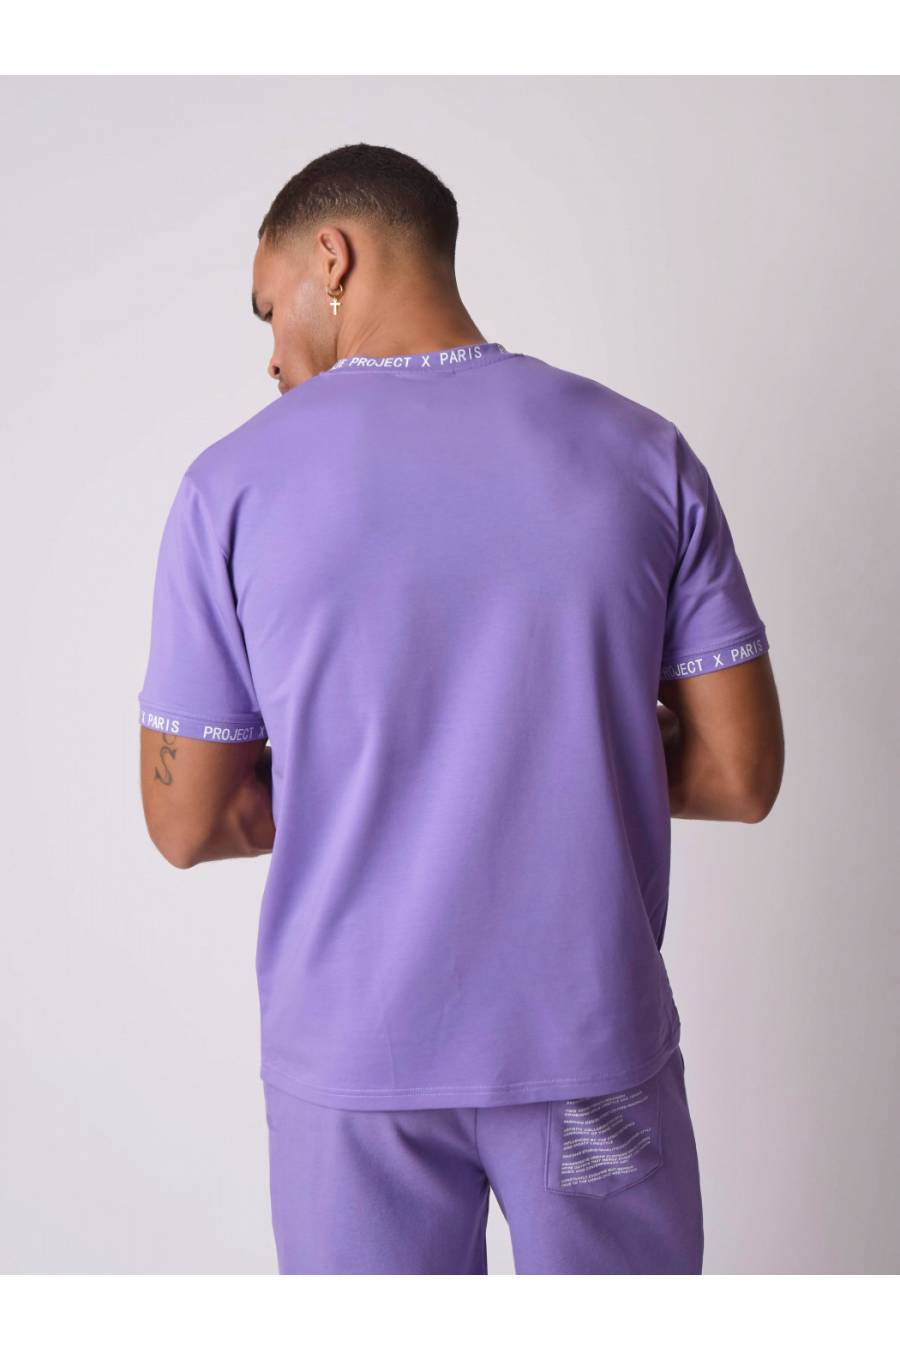 Camiseta para hombre Project X Paris 2110149-PL - masdeporte -msdsport